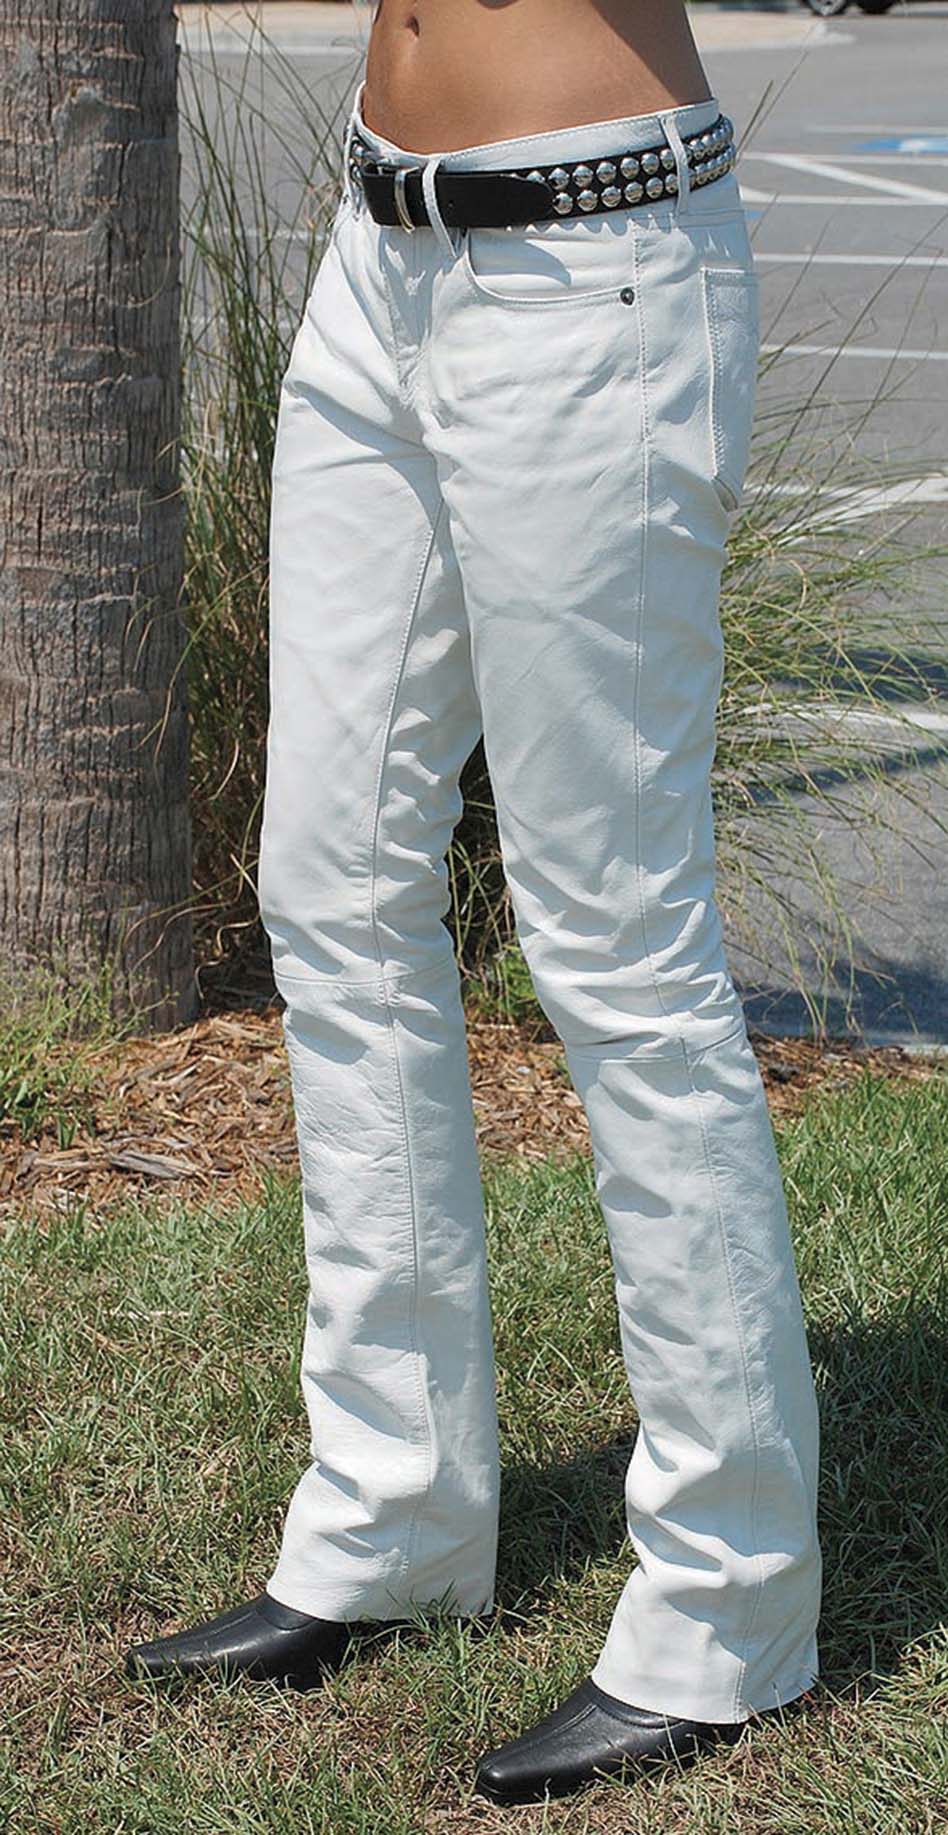 classic white leather biker pants